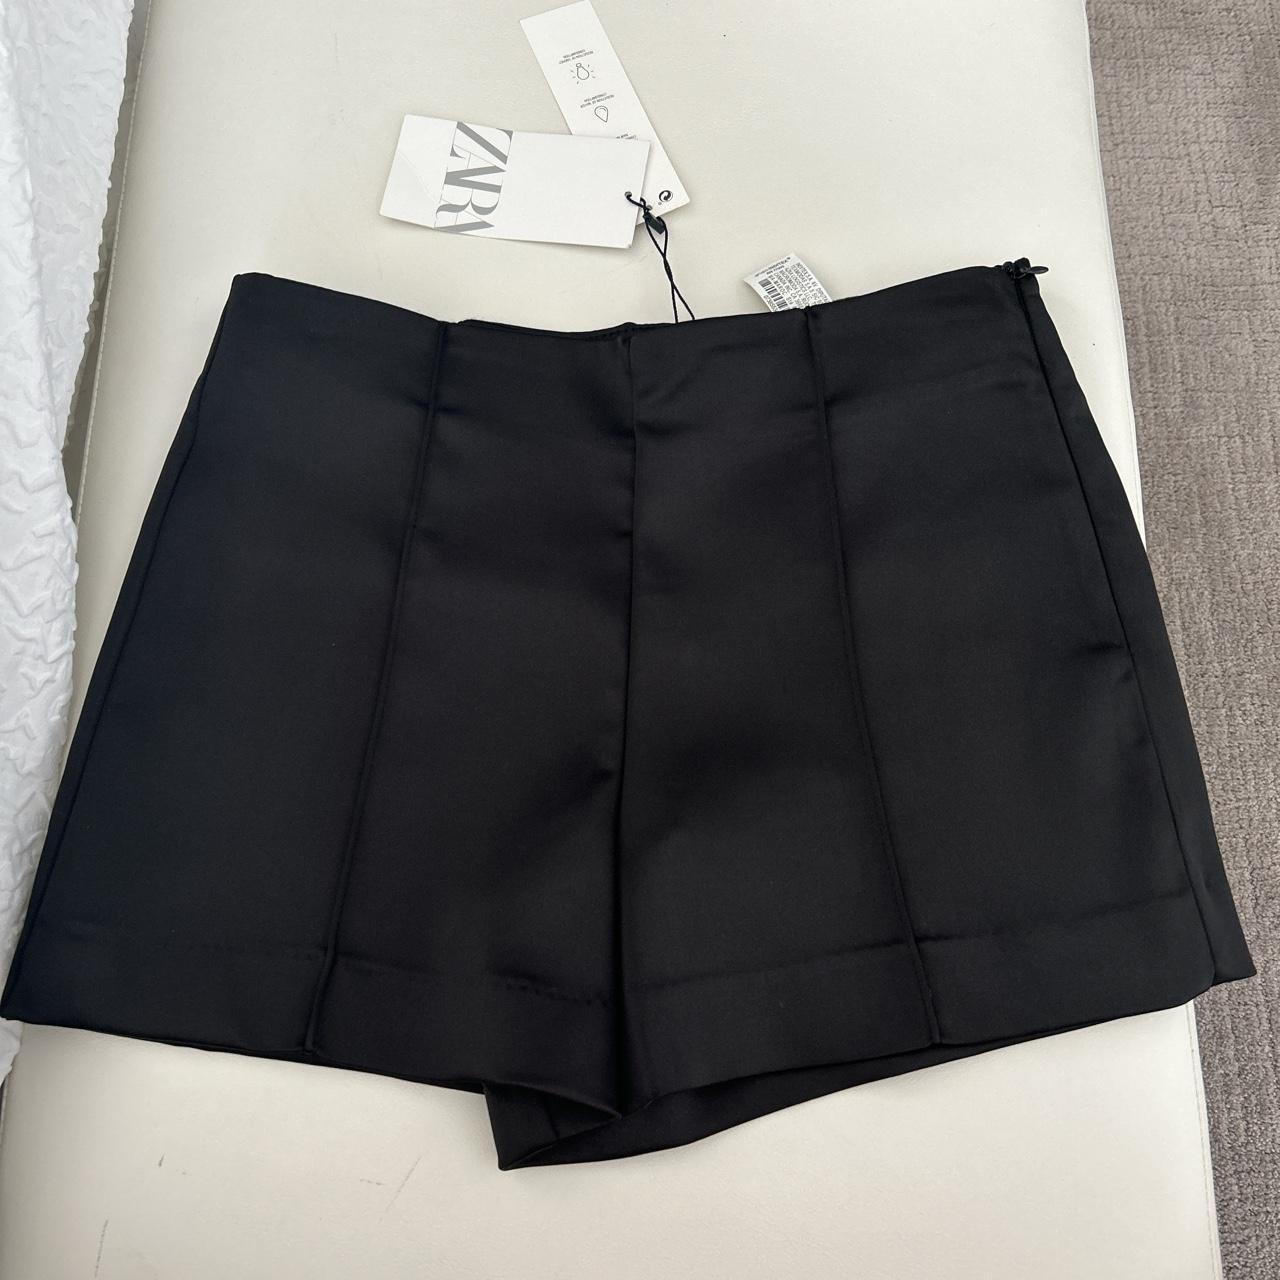 Zara satin black shorts - Depop